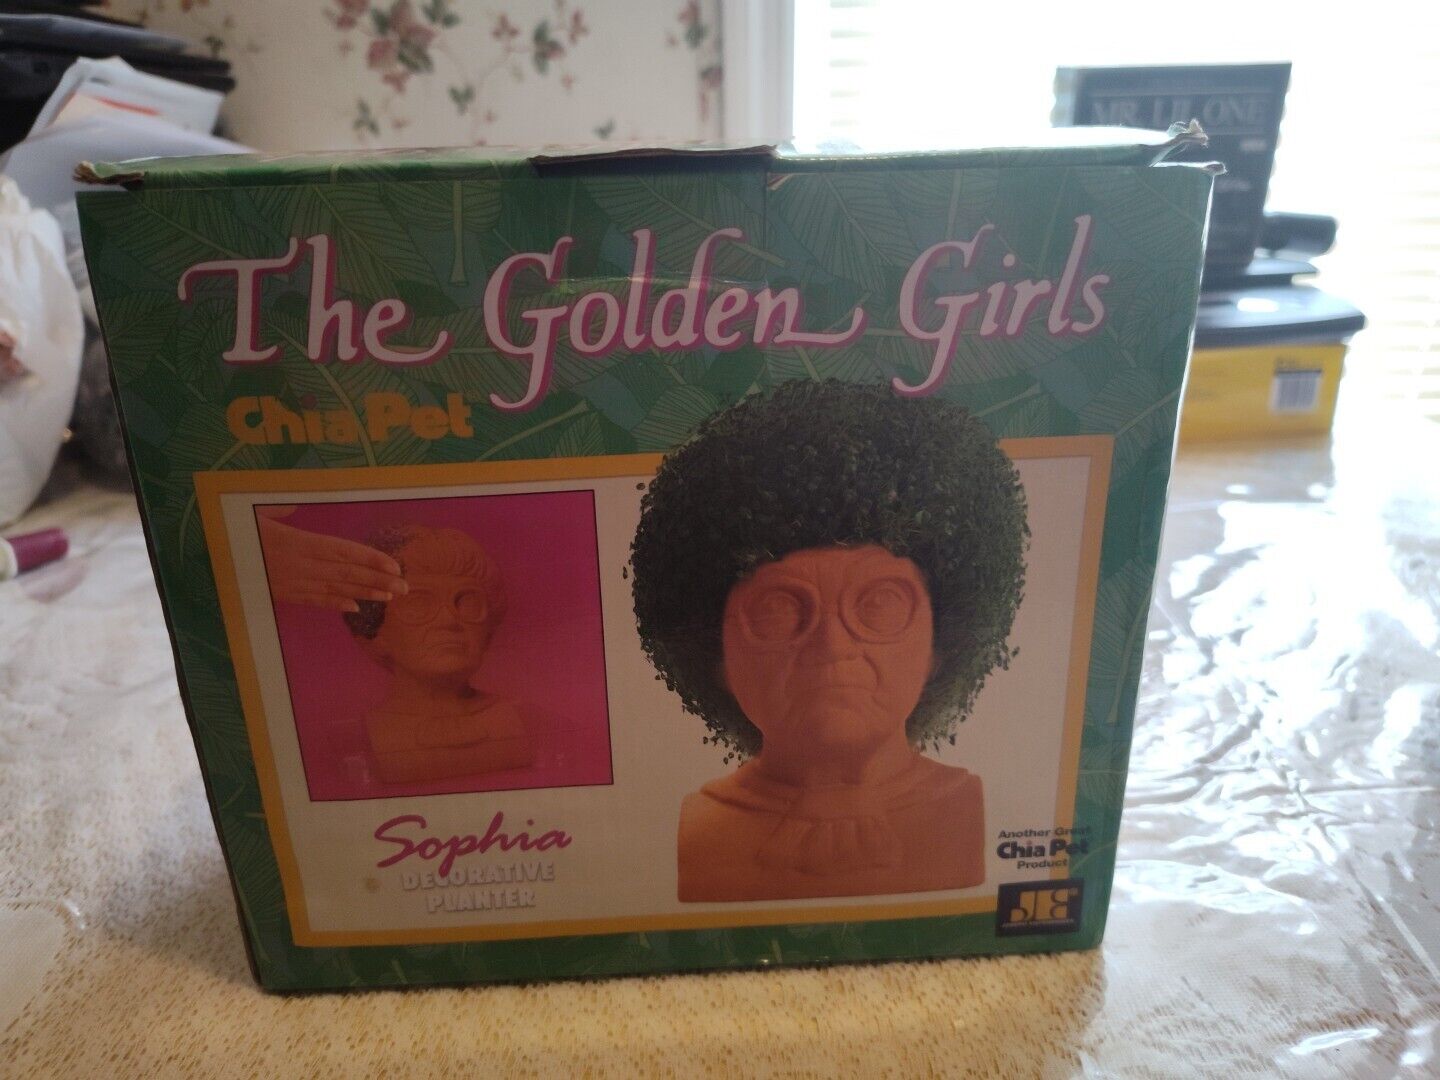 The Golden Girls Sophia Chia Pet Decorative Handmade Pottery Planter New In Box